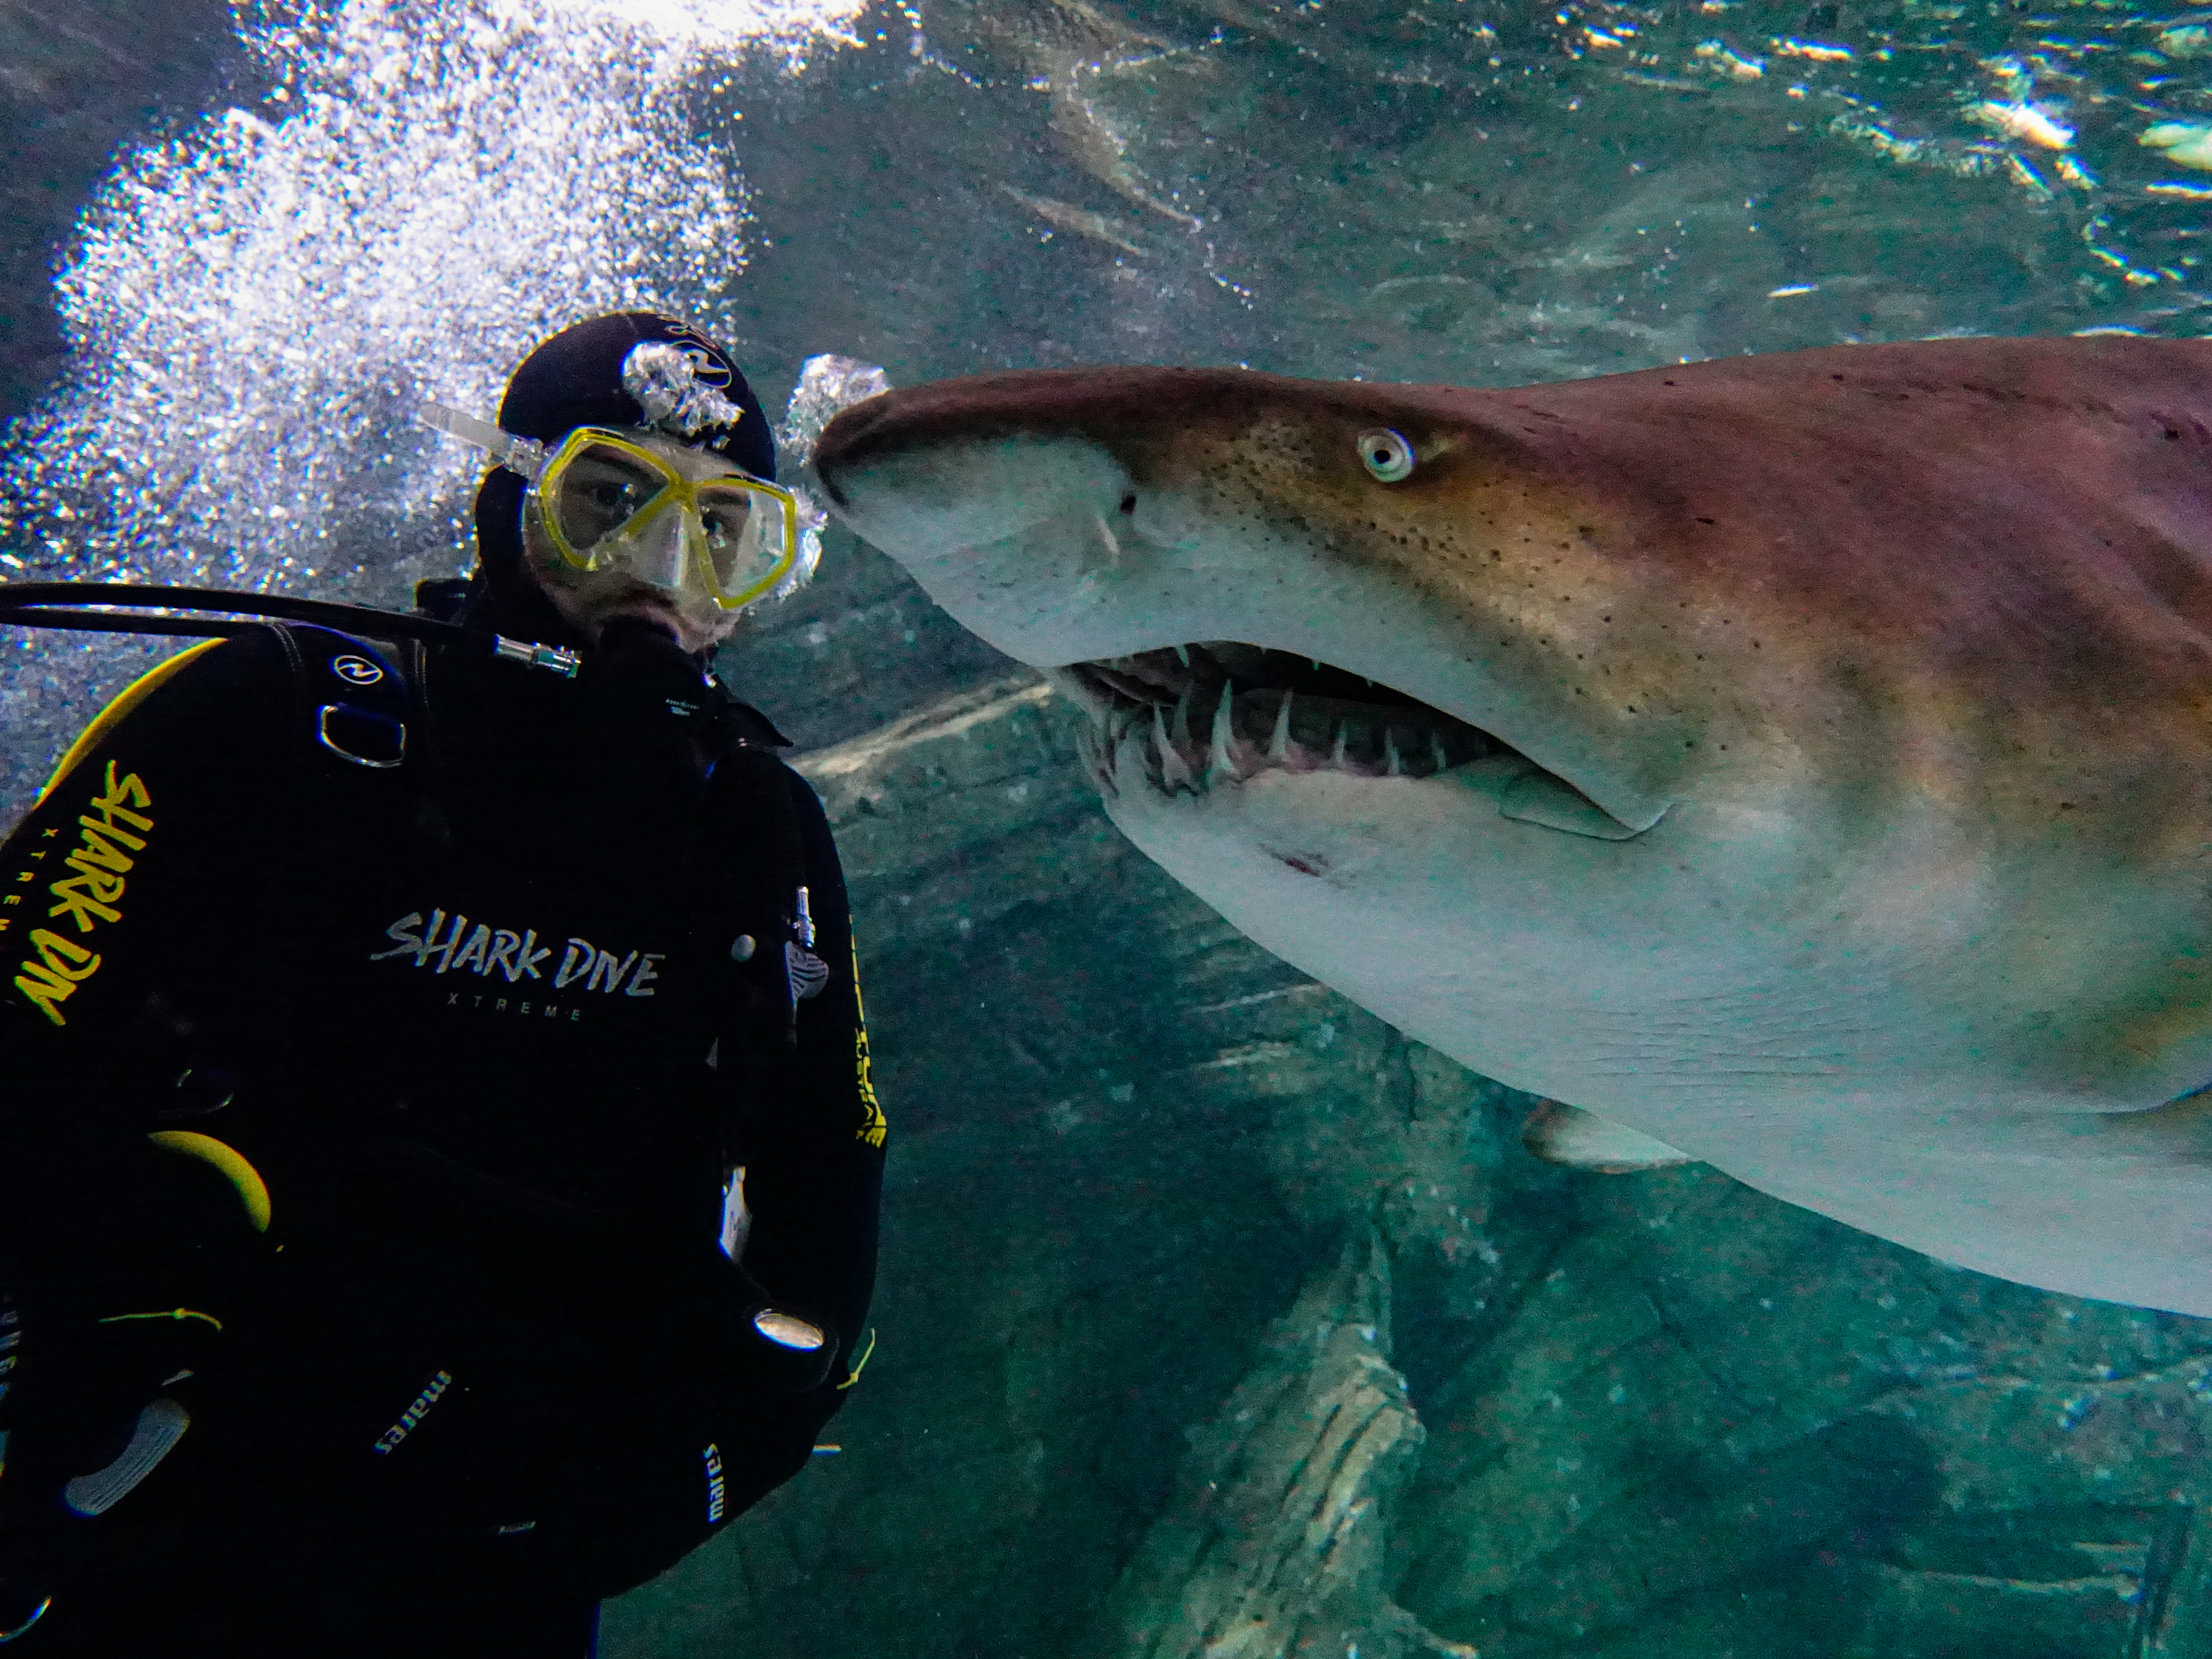 Shark Dive Xtreme experience at SEA LIFE Sydney